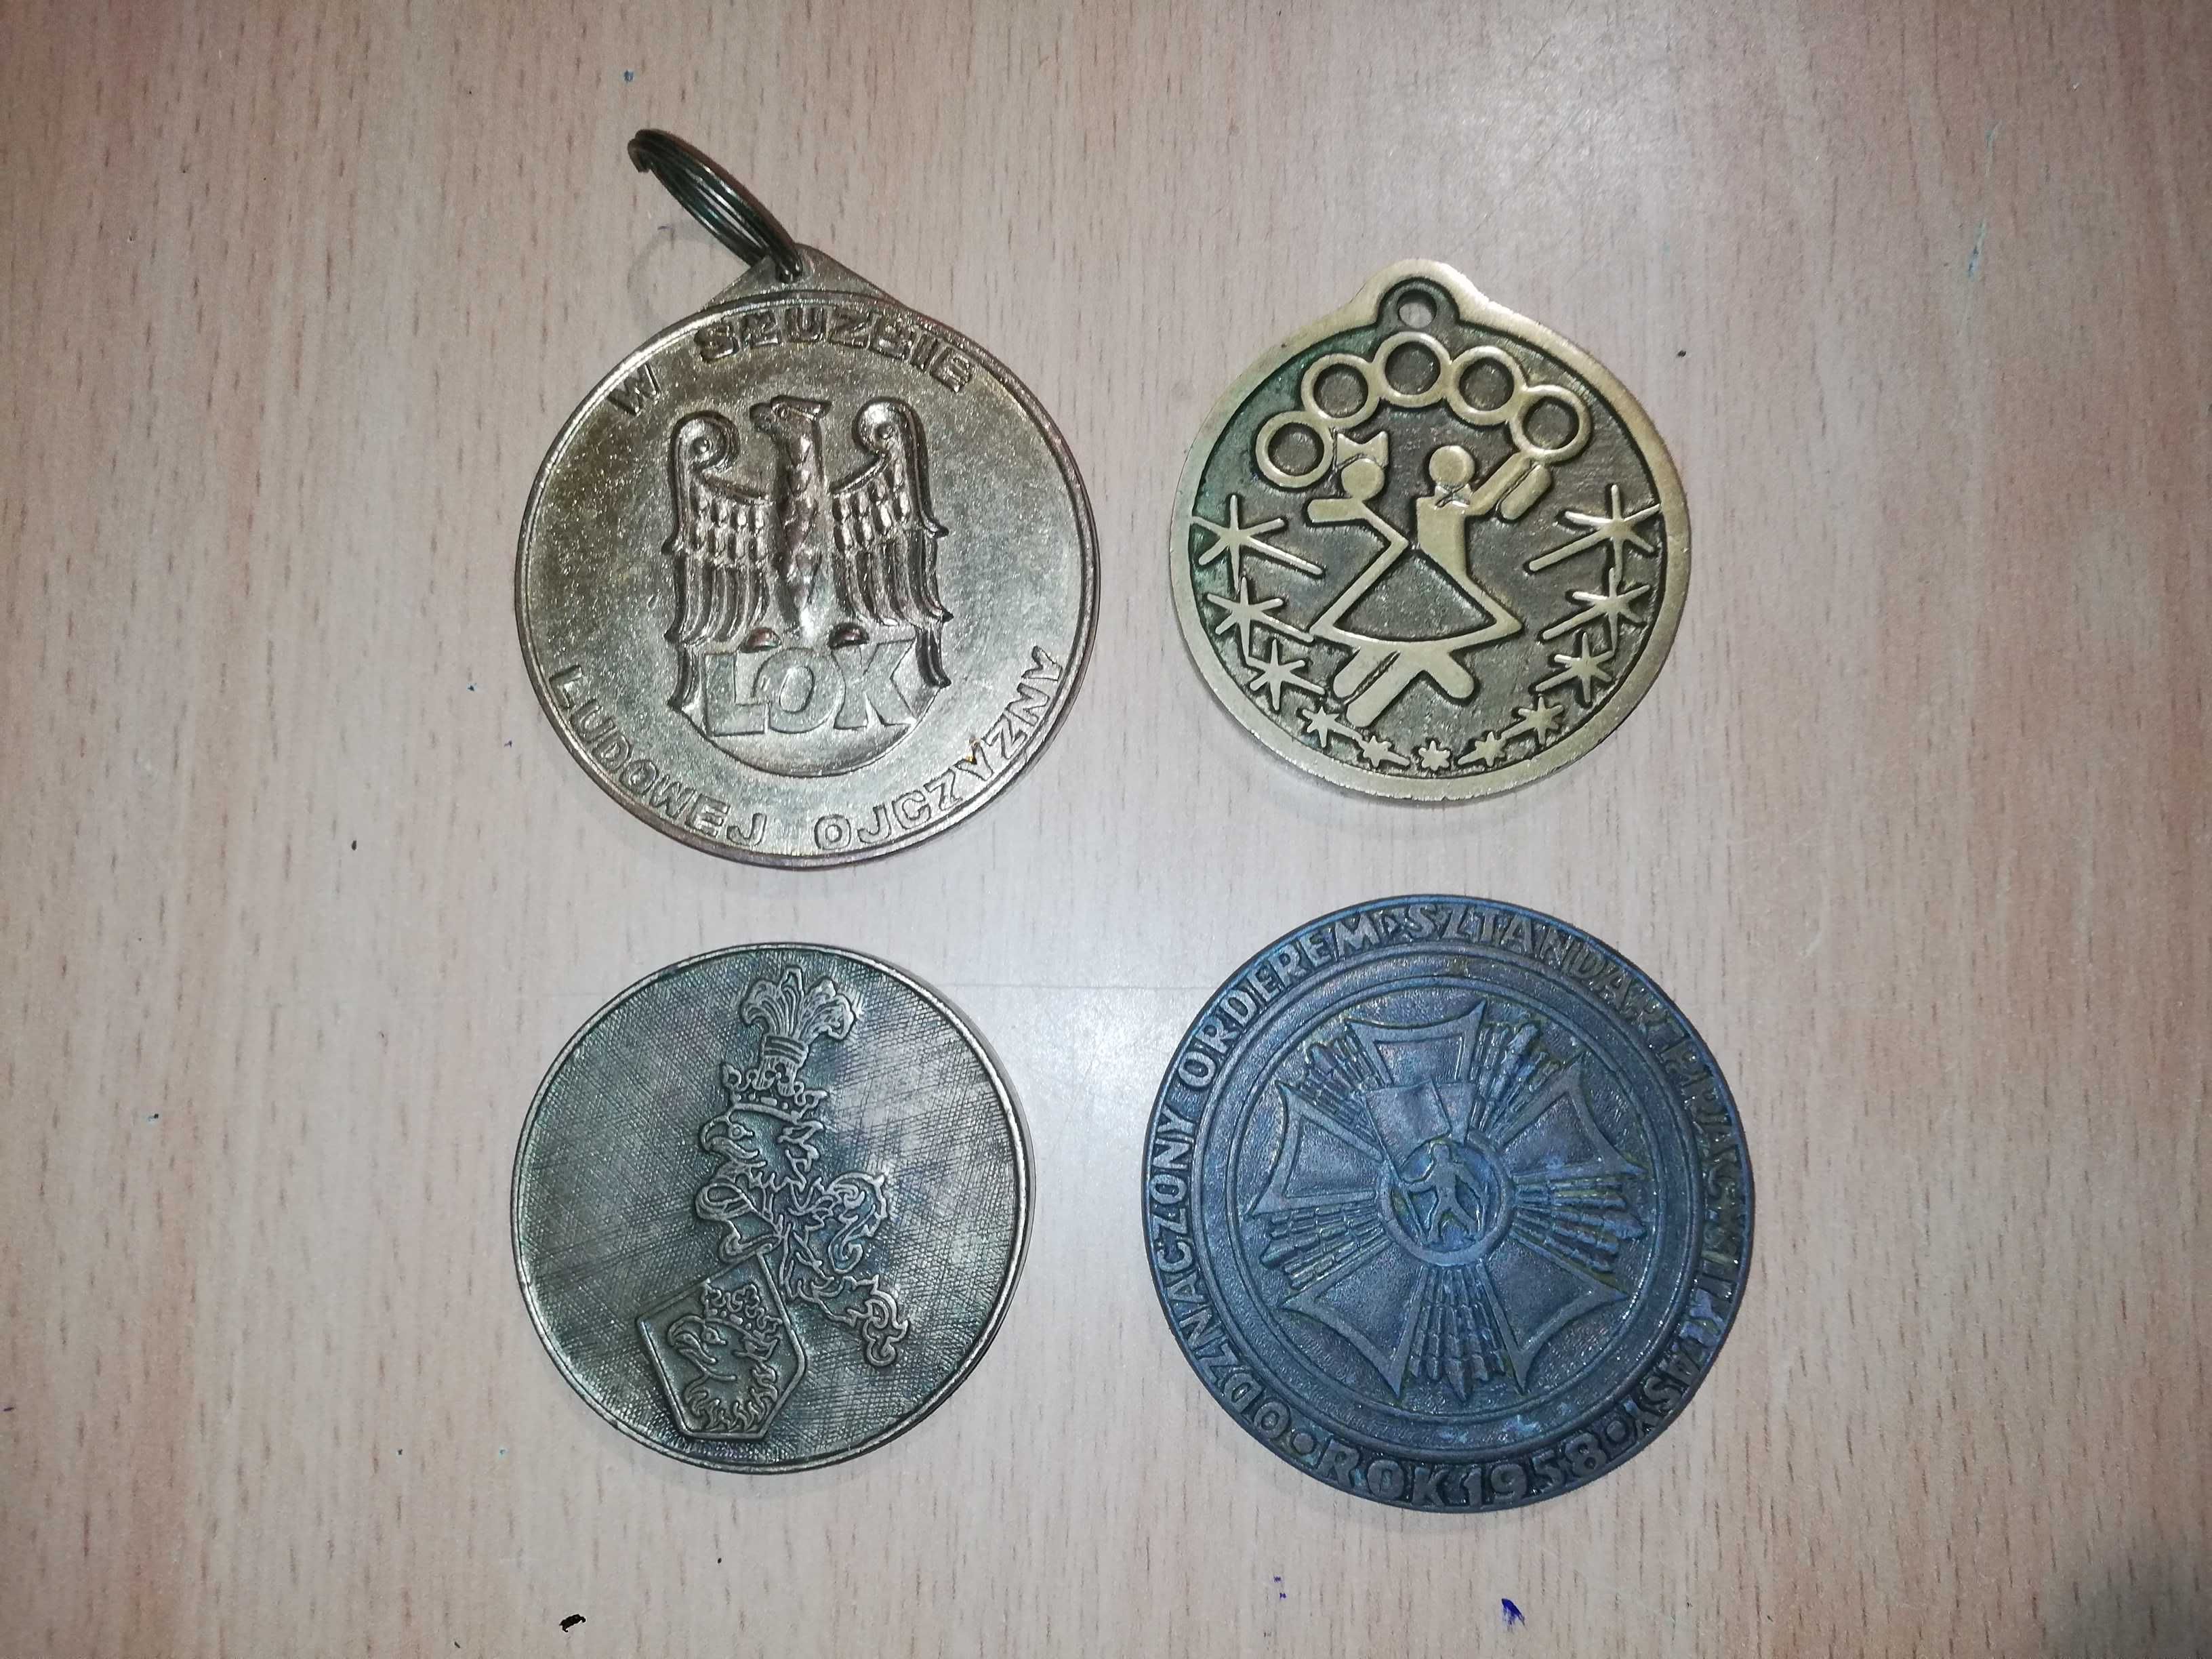 Stare medale PRL